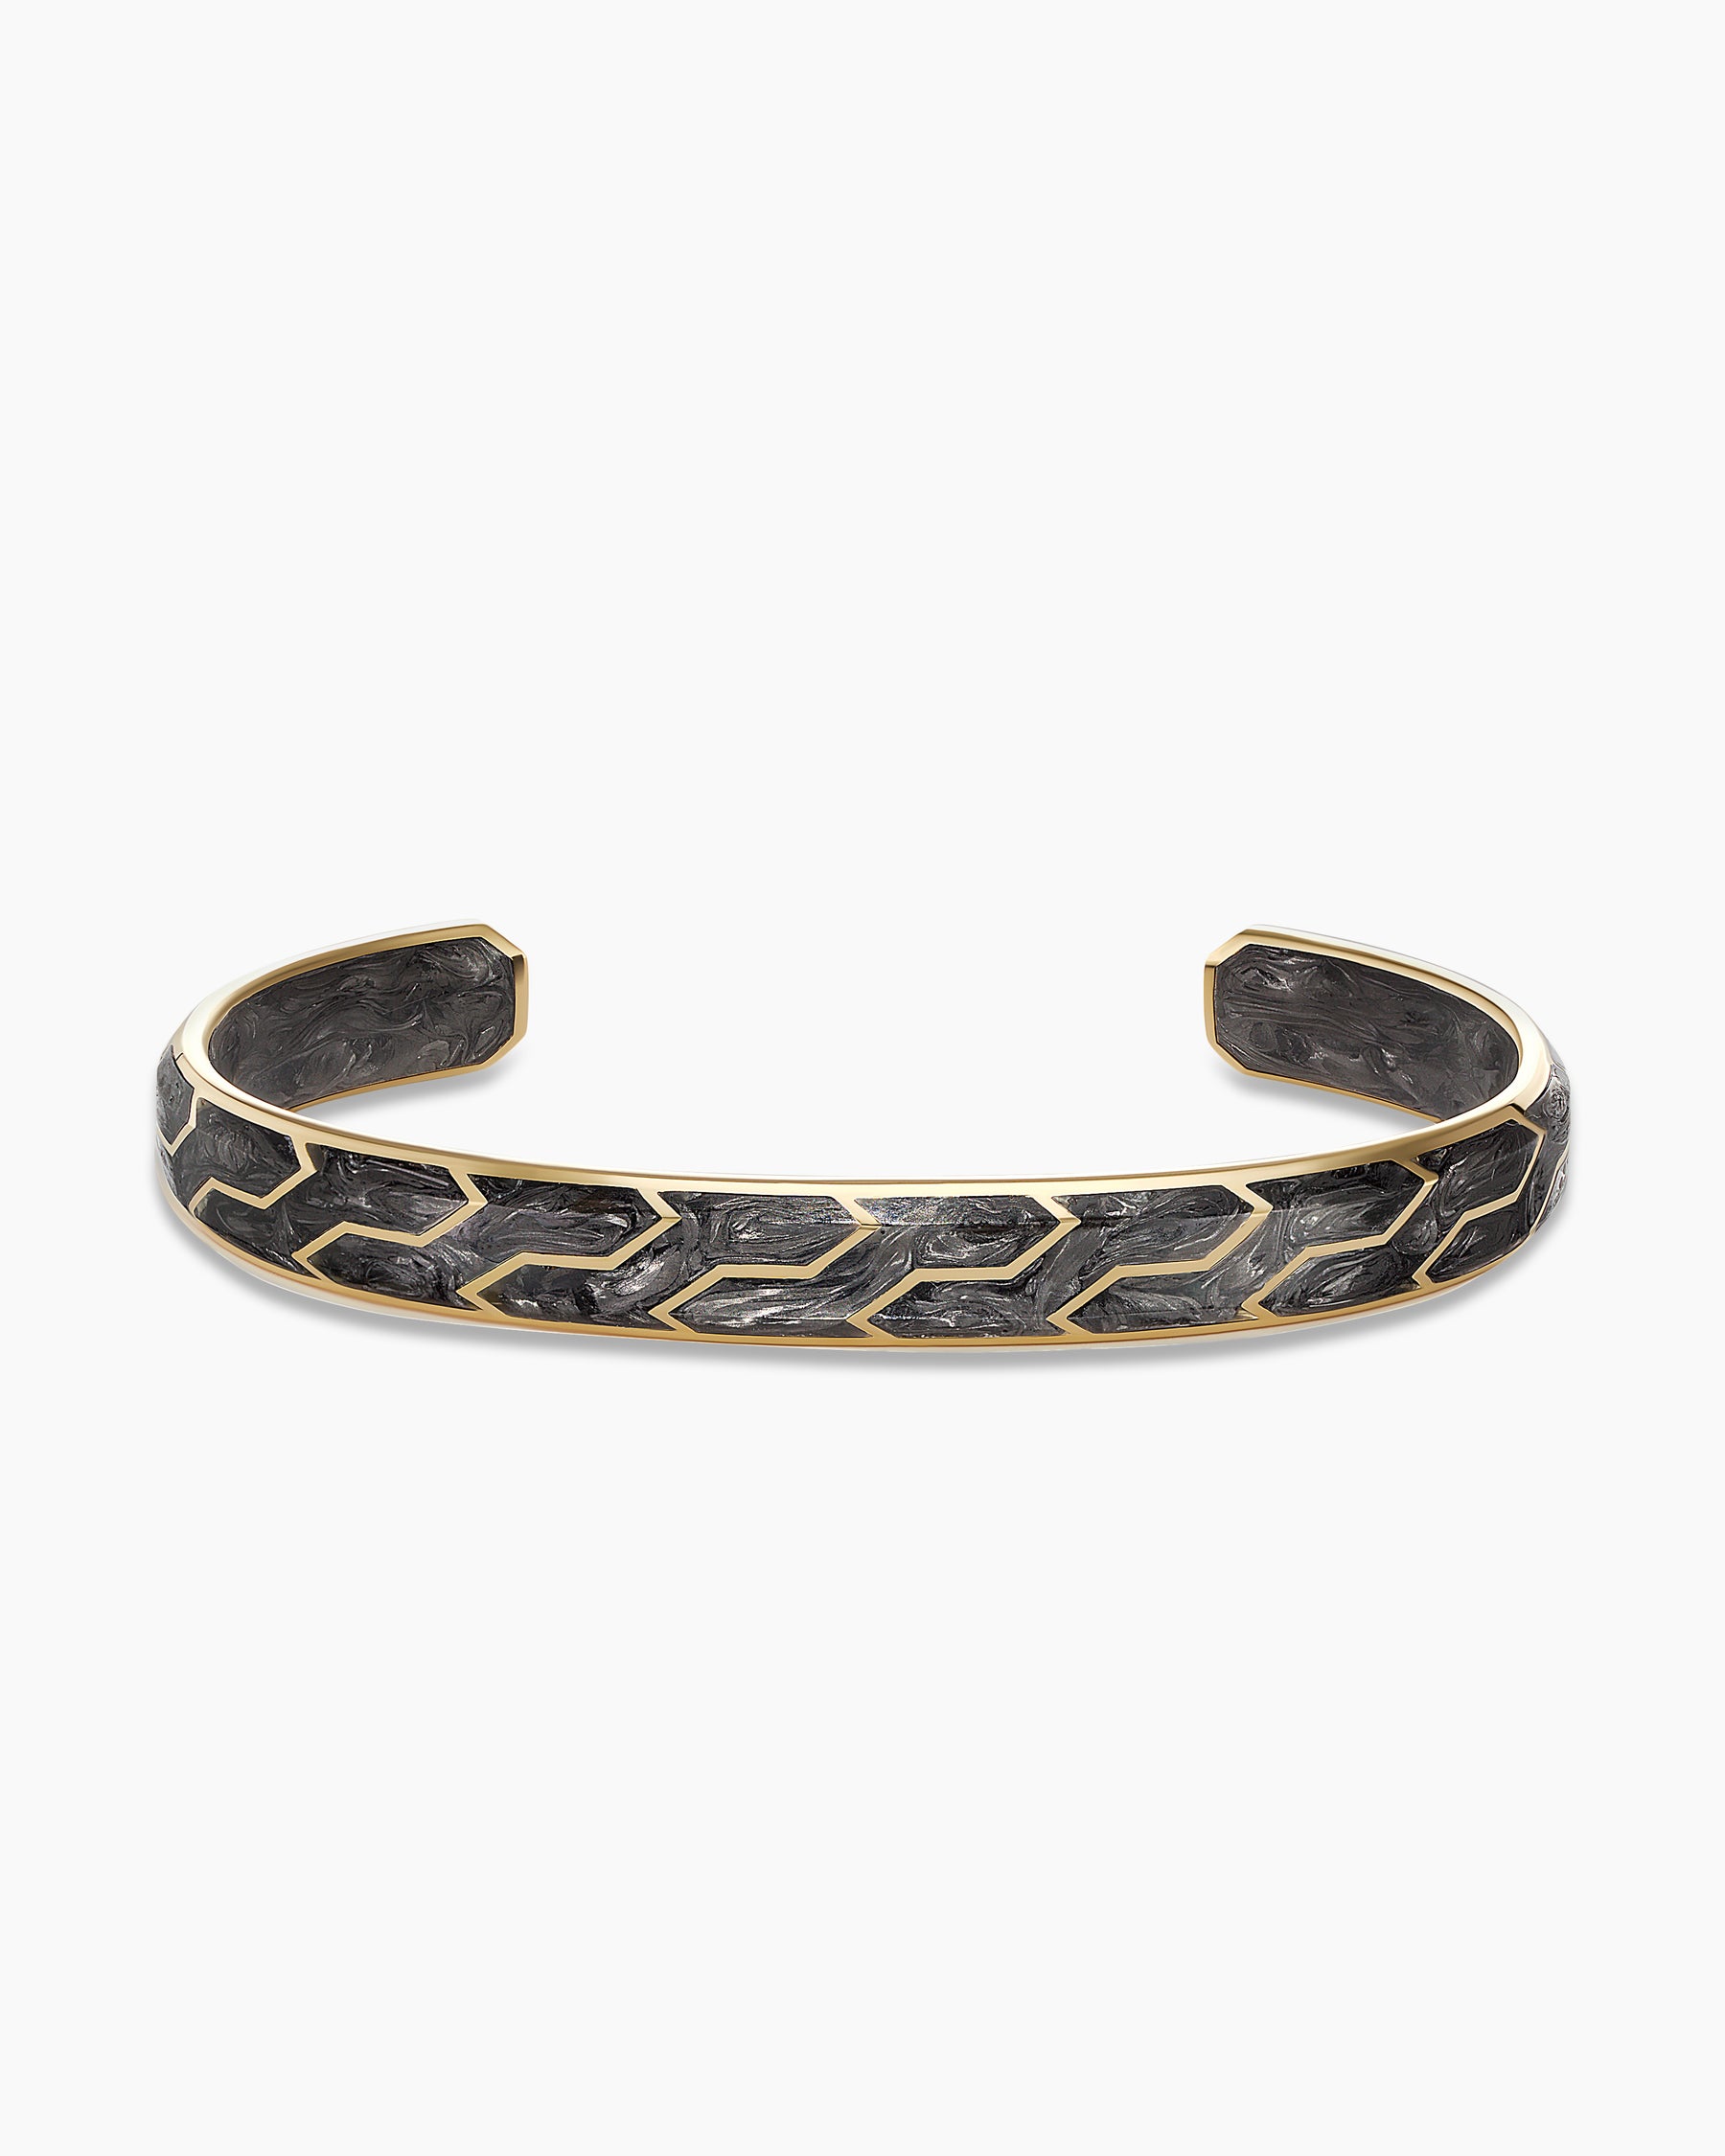 HERMÈS Cuff Bracelet in enameled gold metal